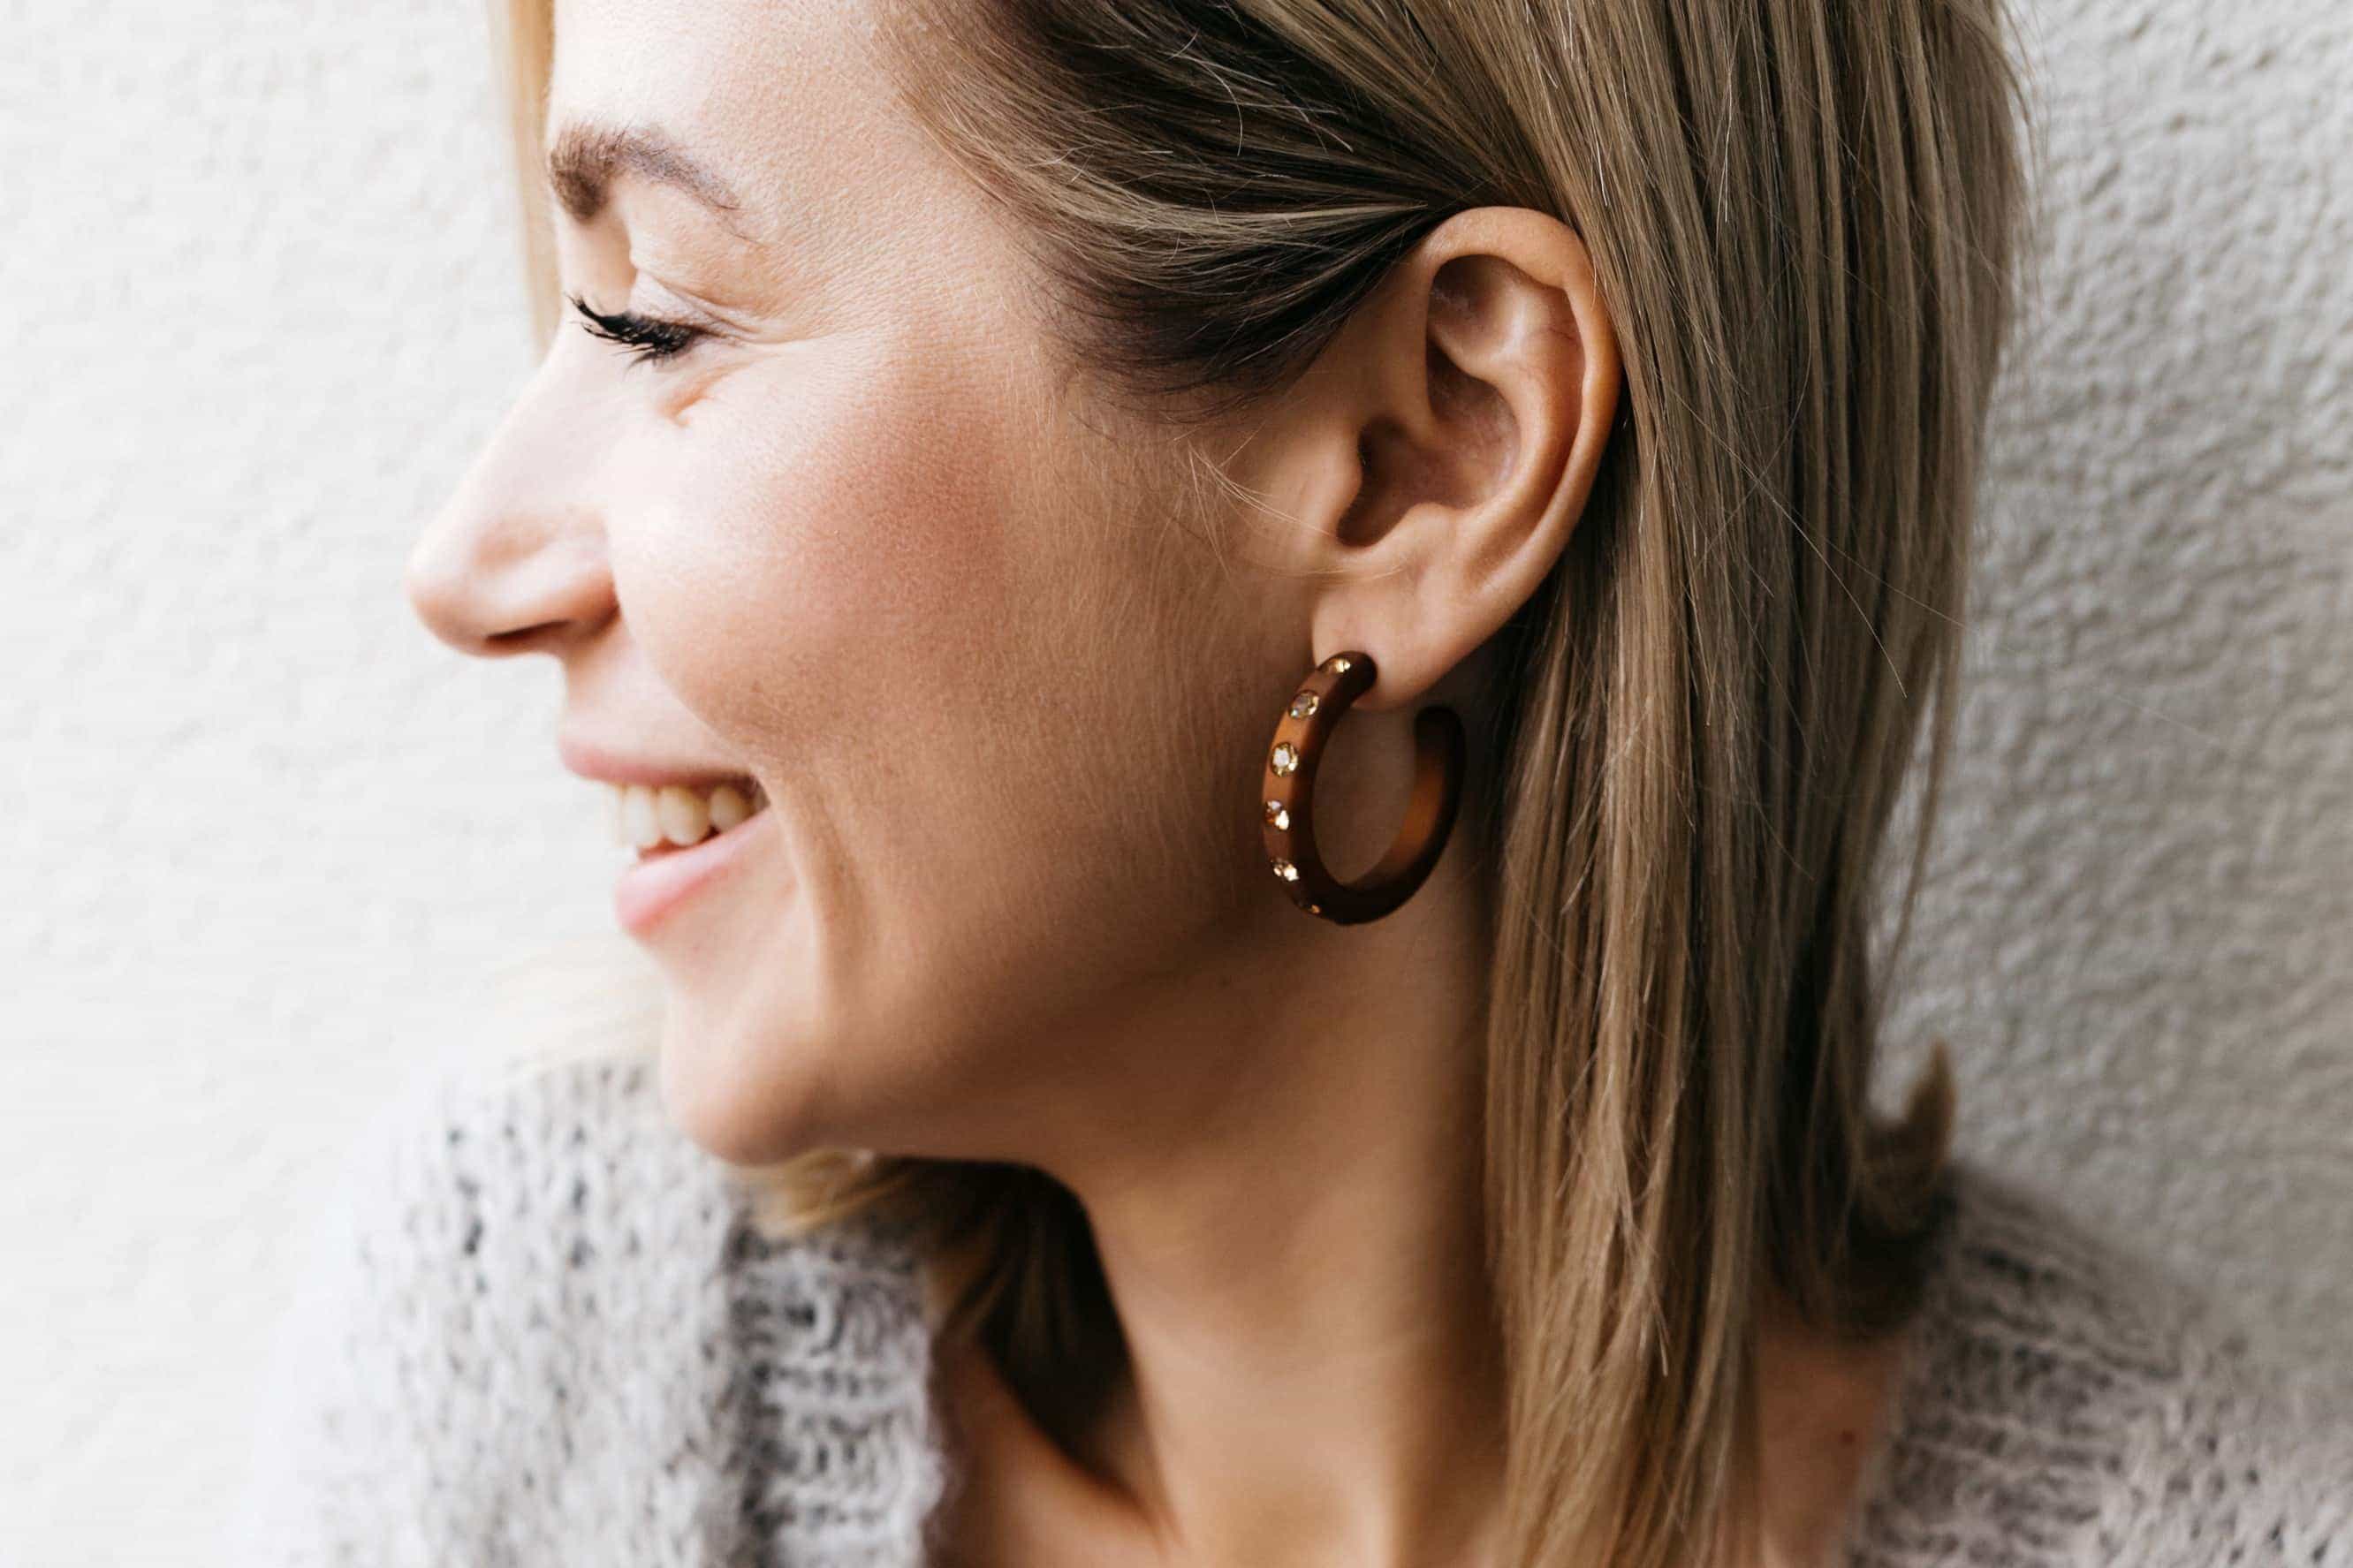 Frau mit großen Ohrringen mit Kristallen in braun. Woman with large earrings with crystals in brown.